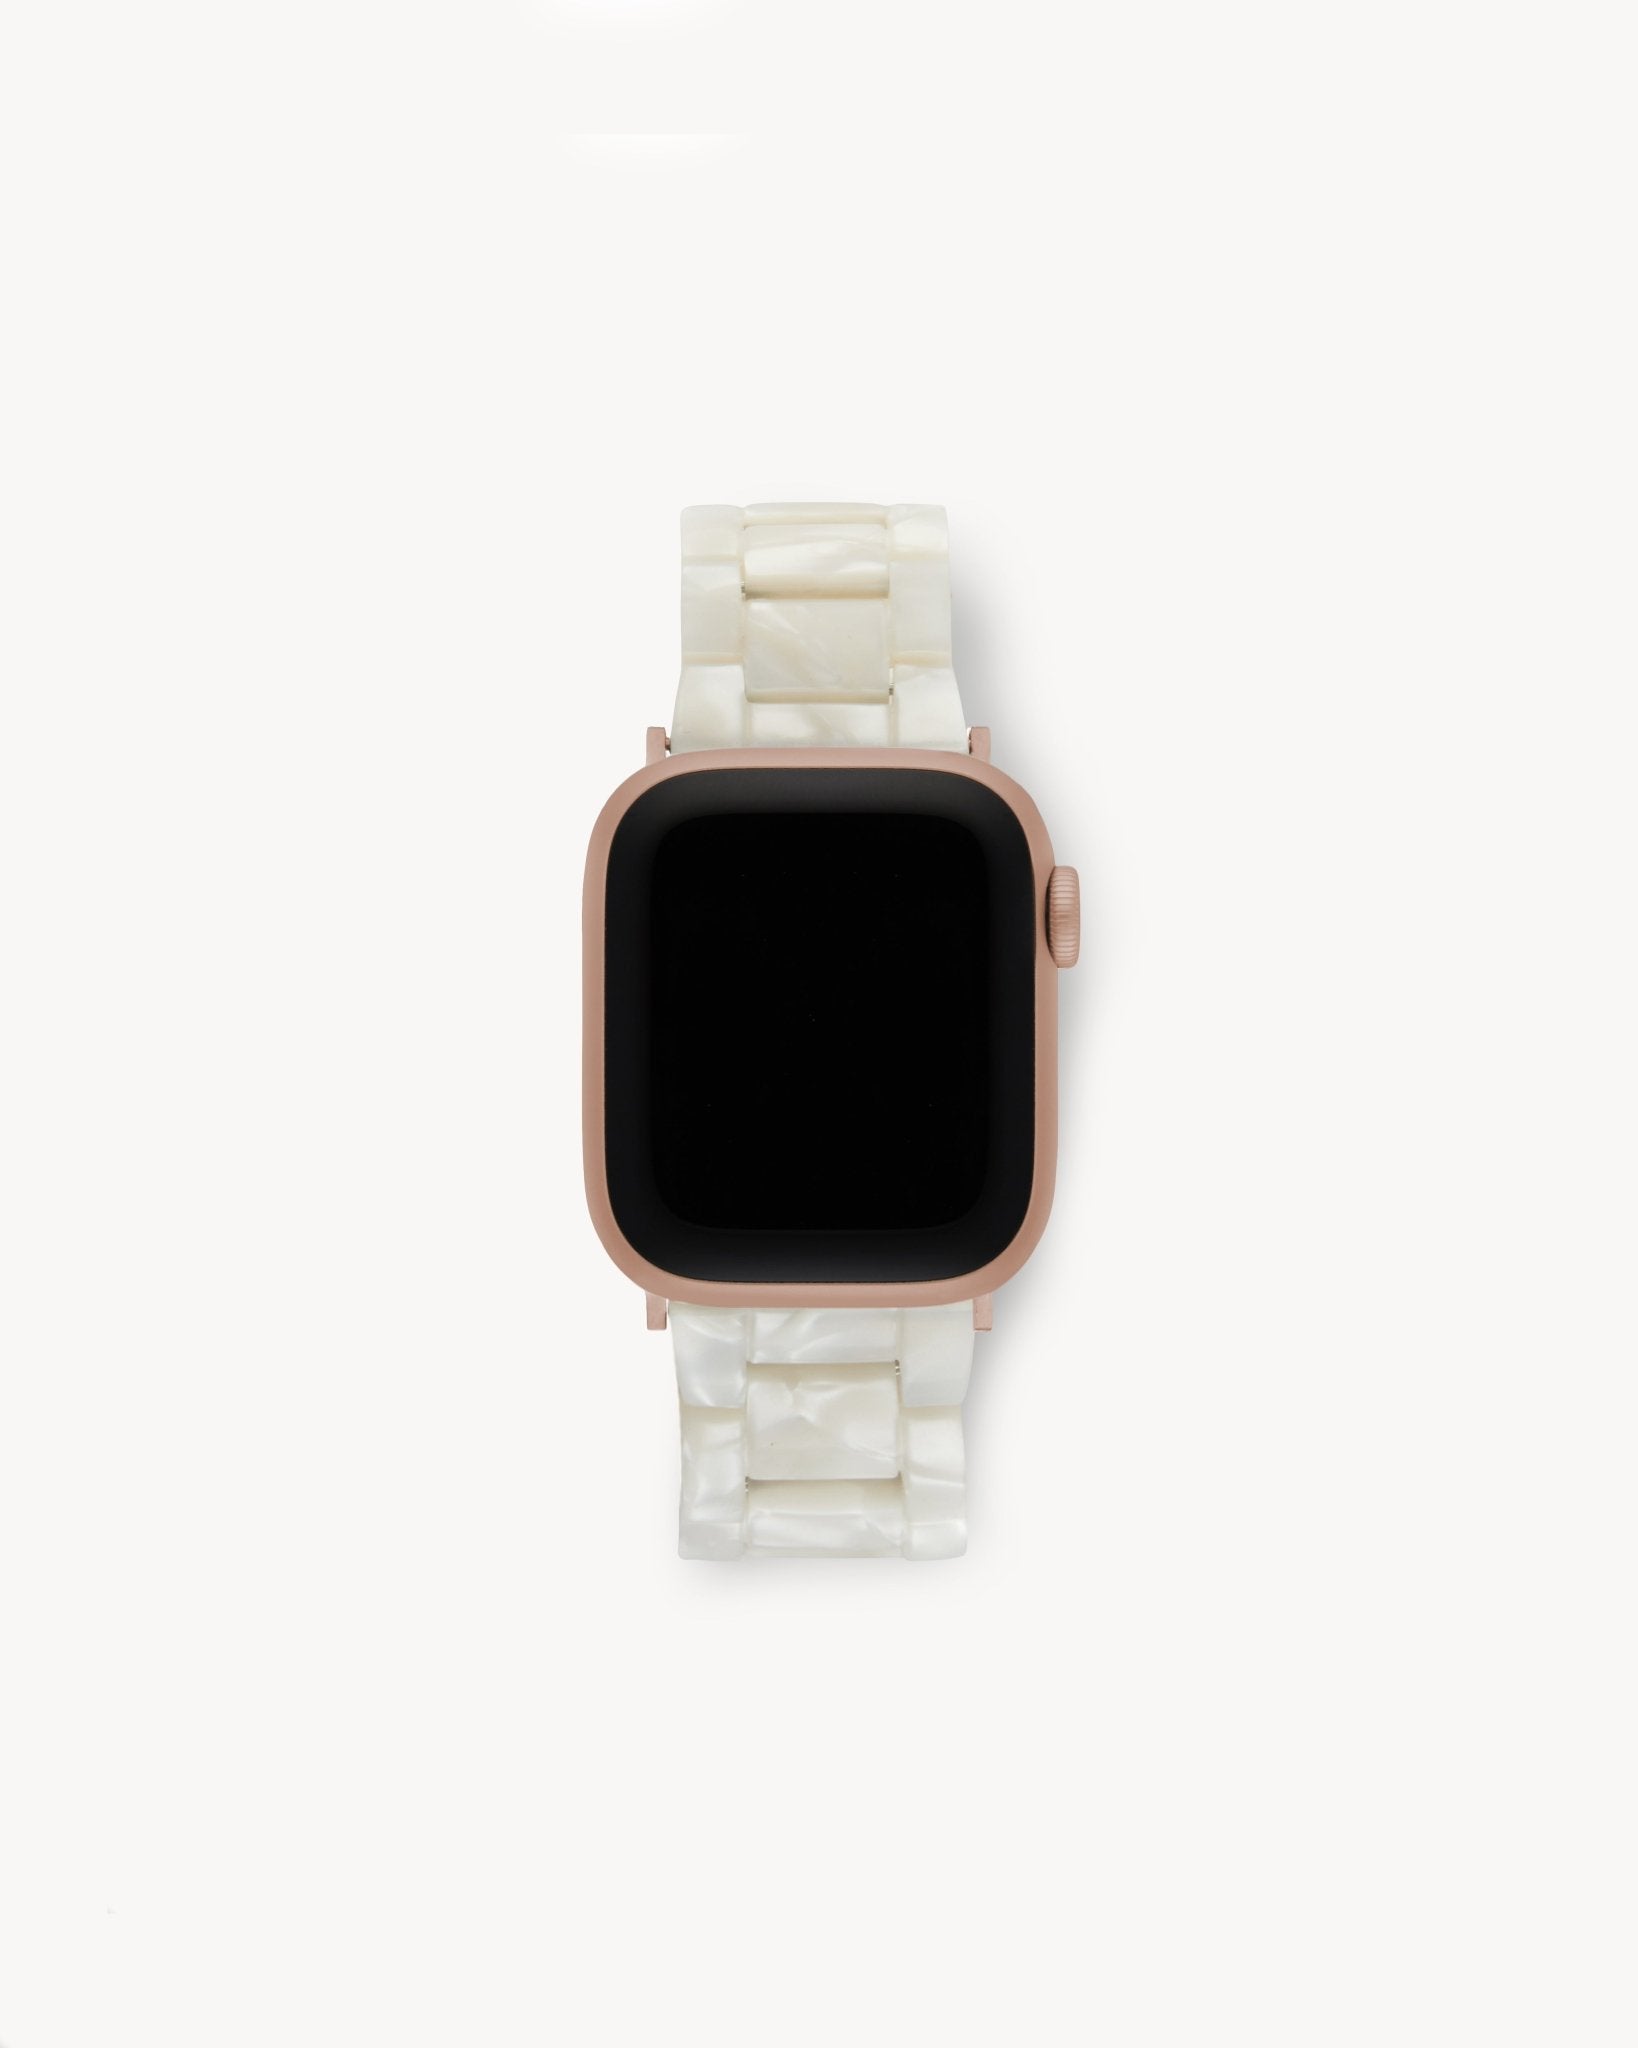 Apple Watch Band in White Shell - MACHETE